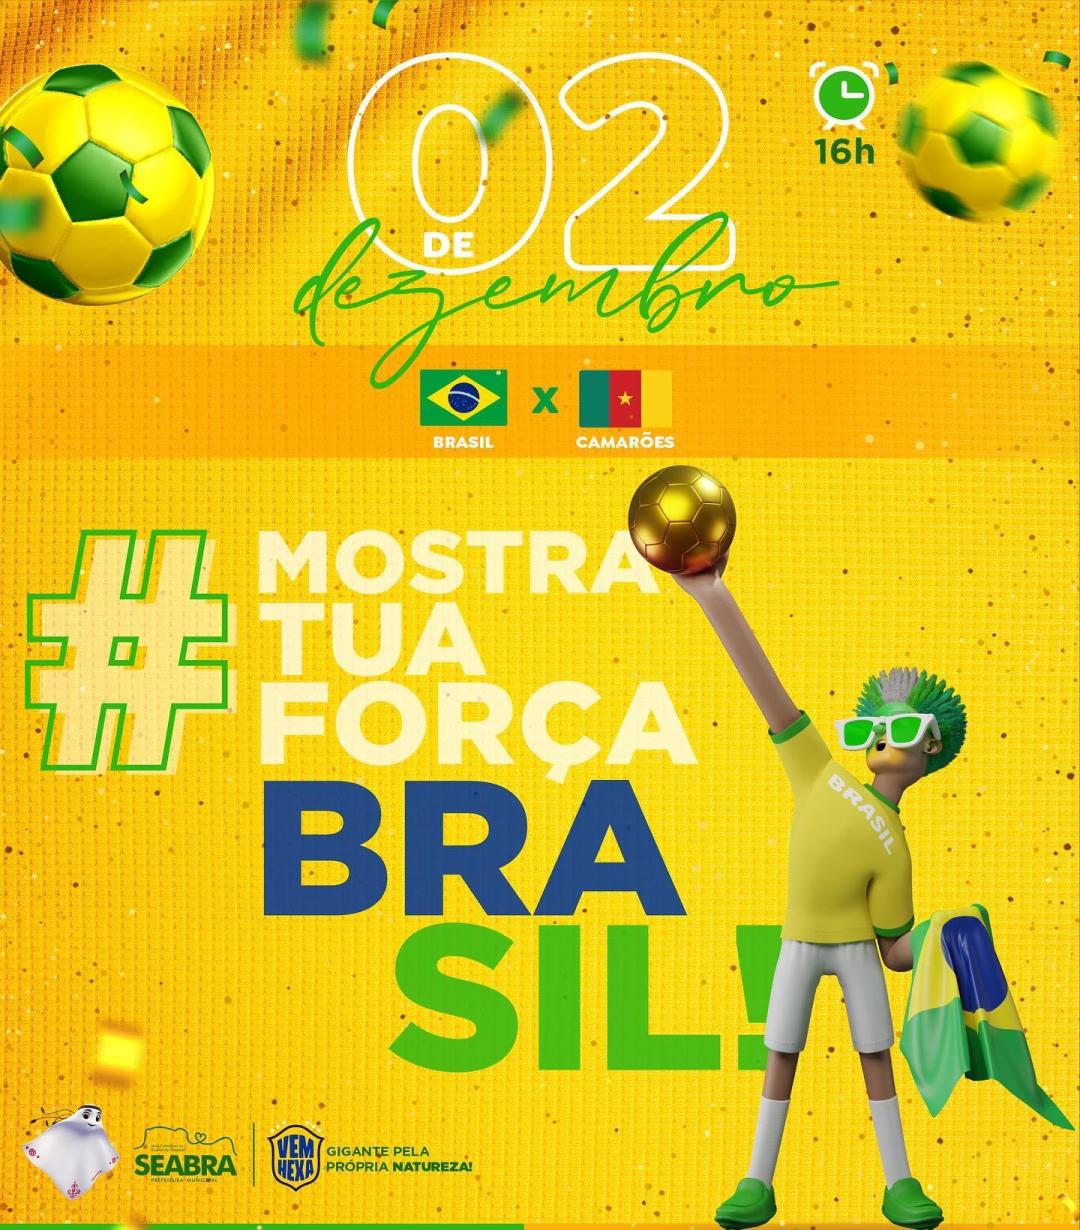 Mostra tua força Brasil!